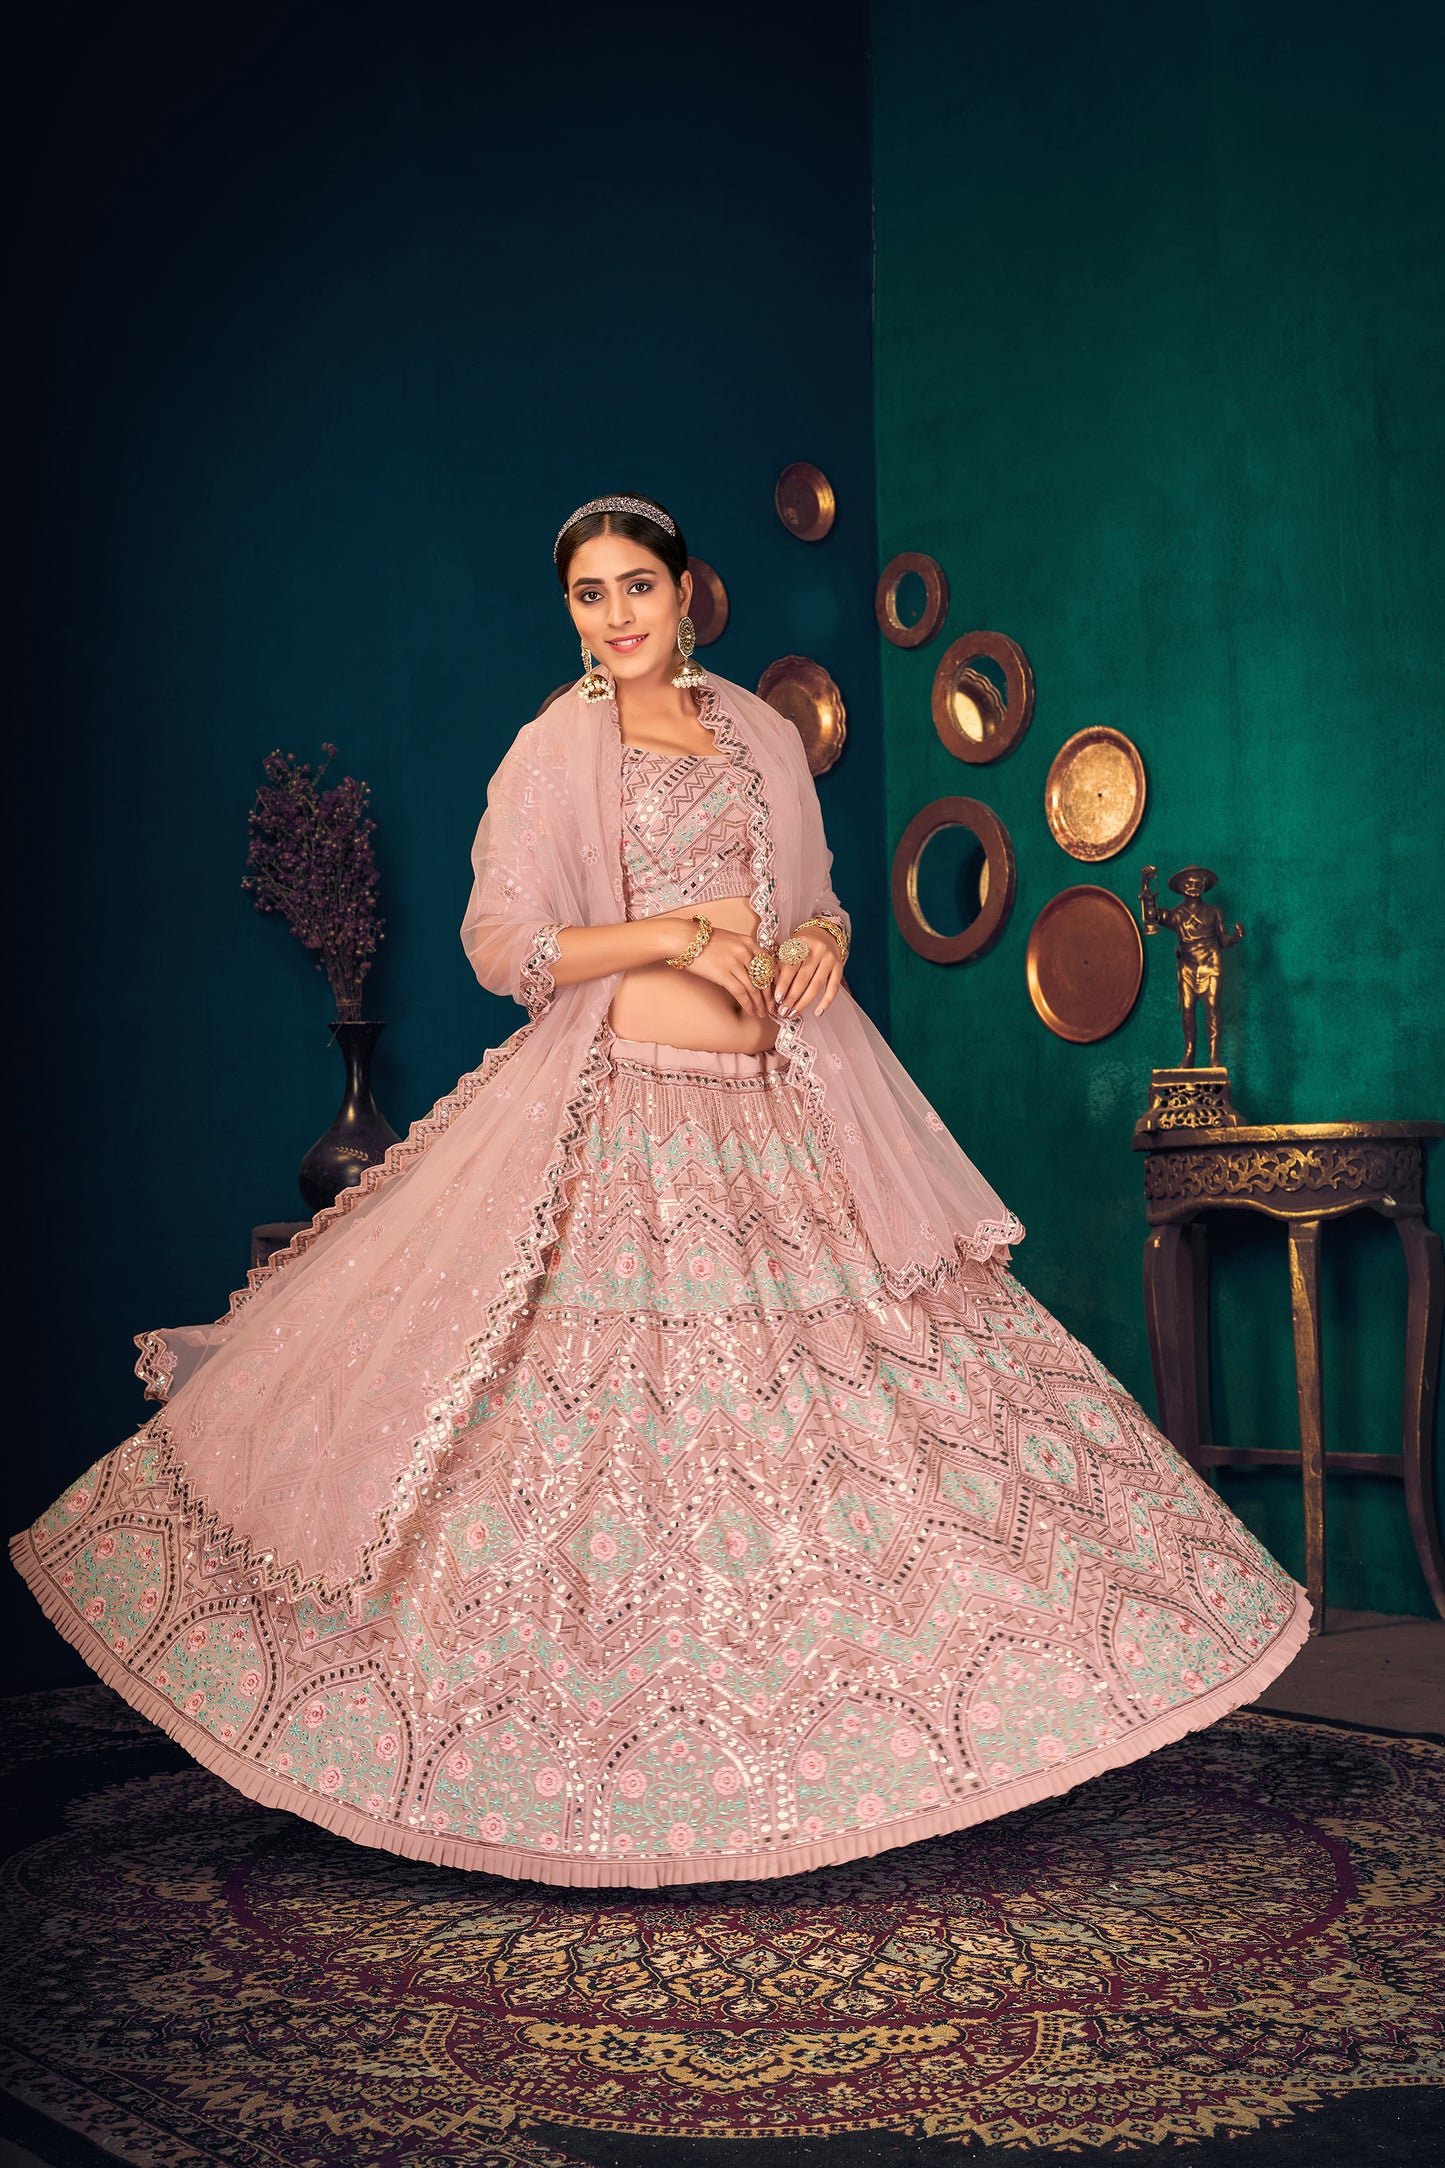 Light Pink color heavy designer lehenga for wedding functions